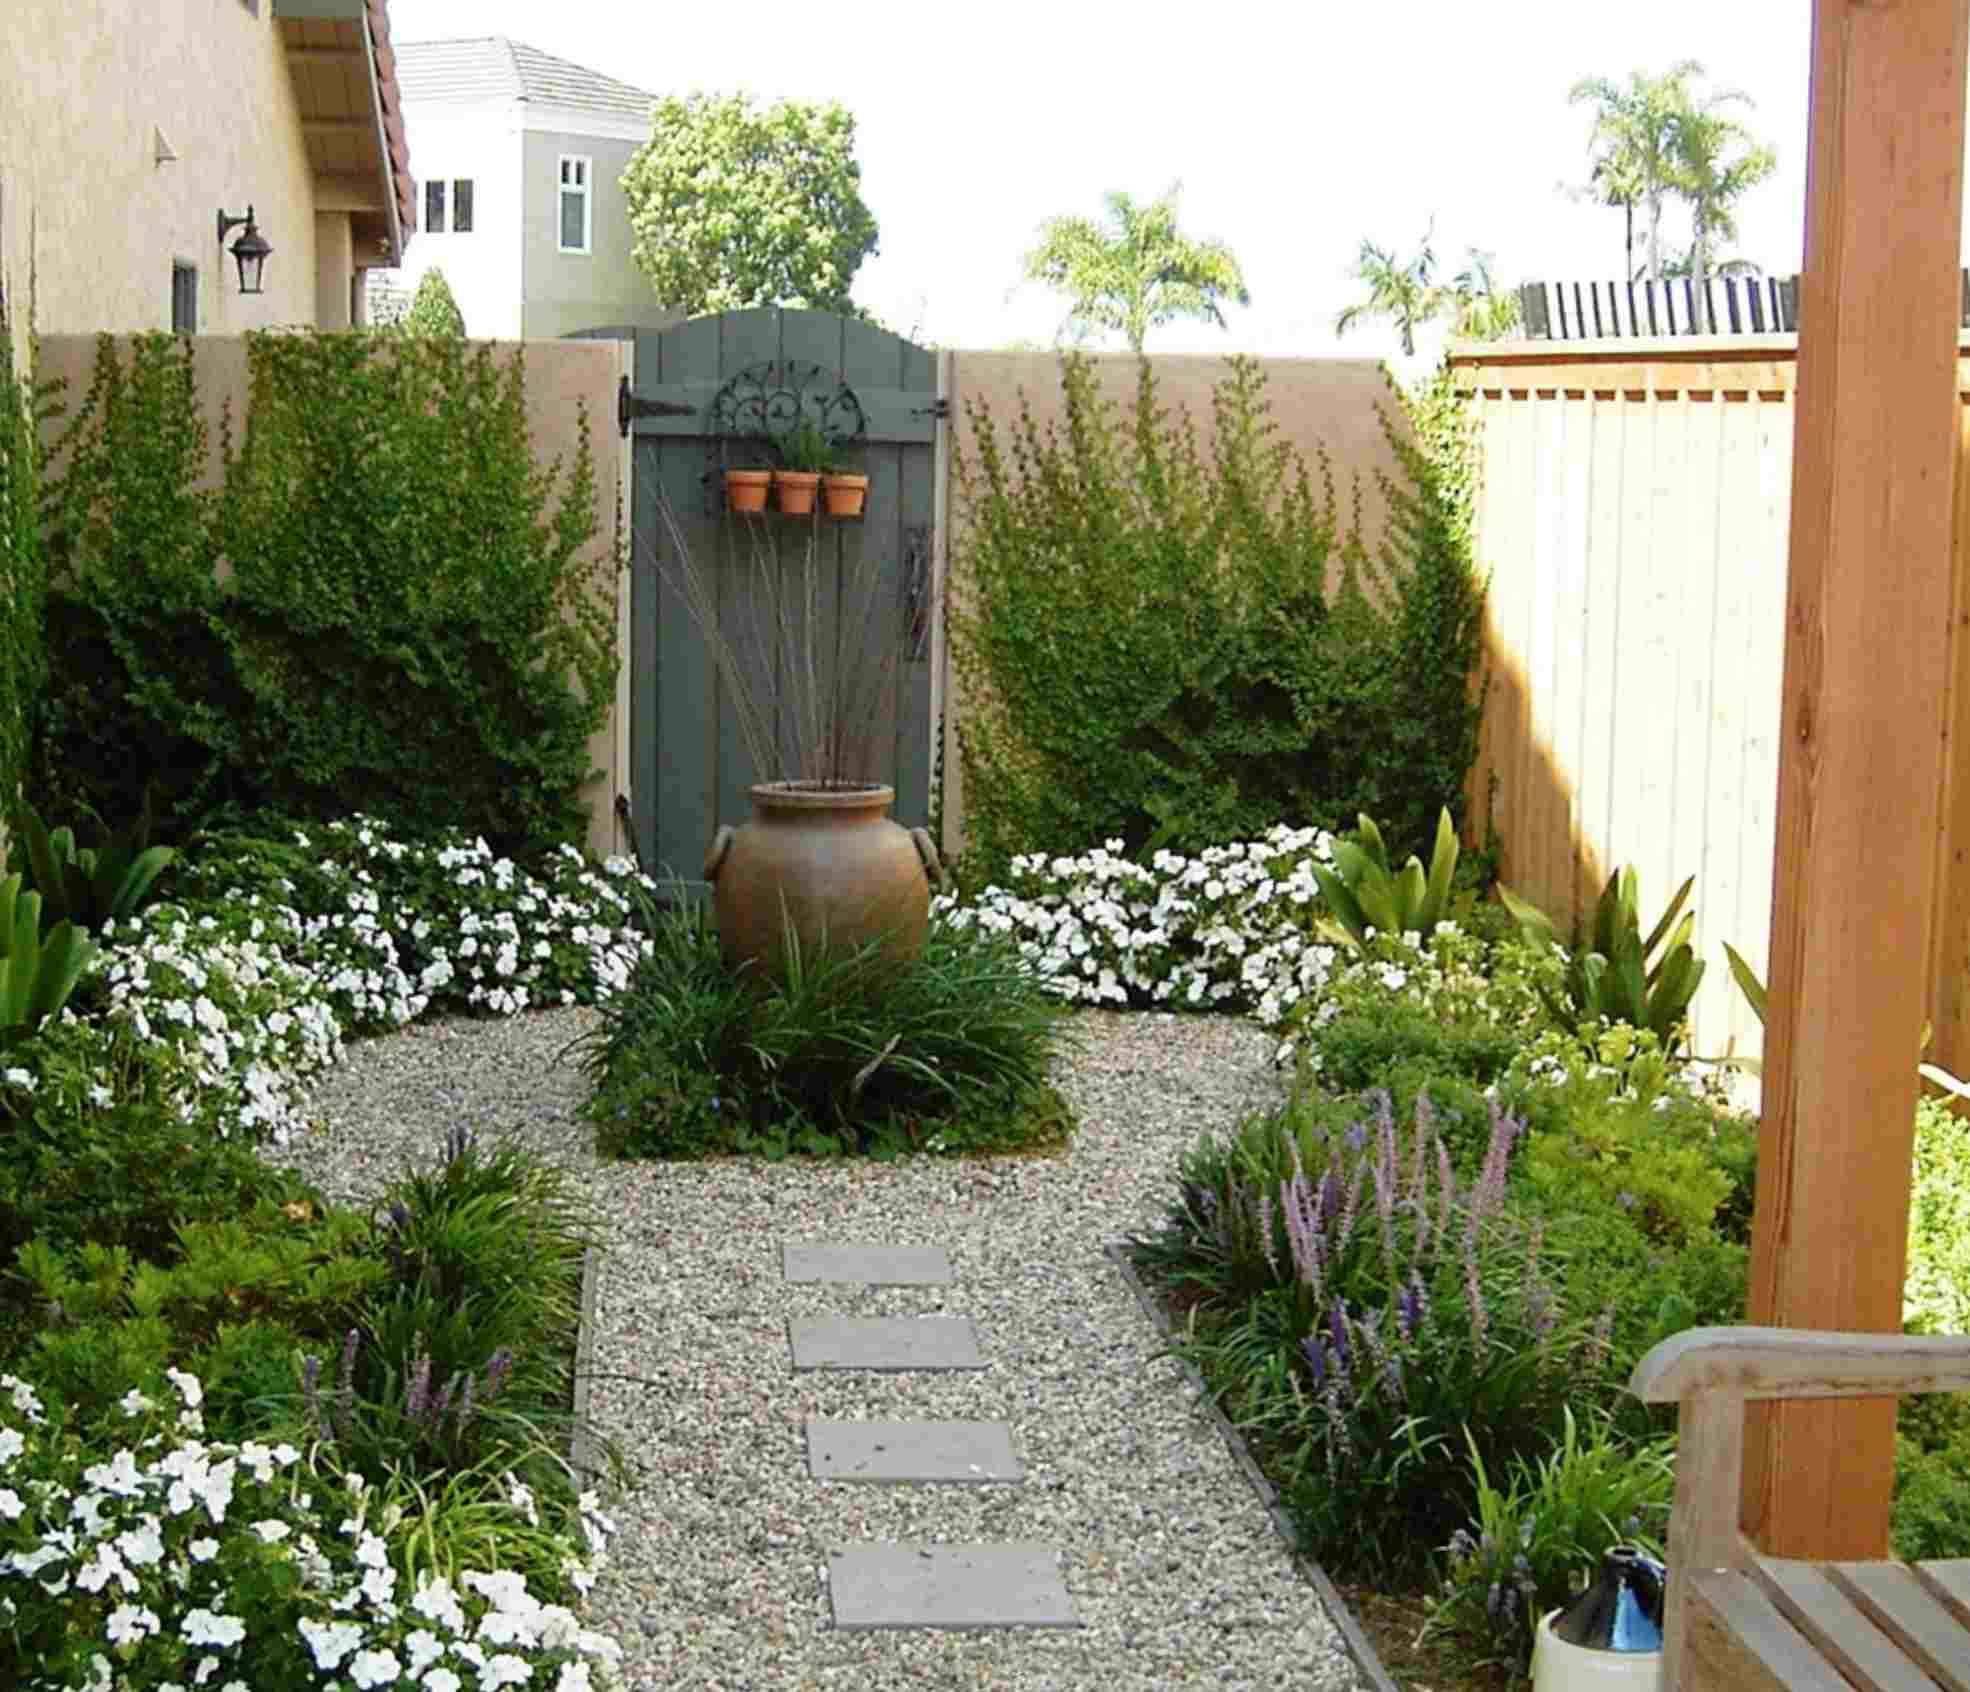 Hosta Shade Garden Front Yard Landscaping Design